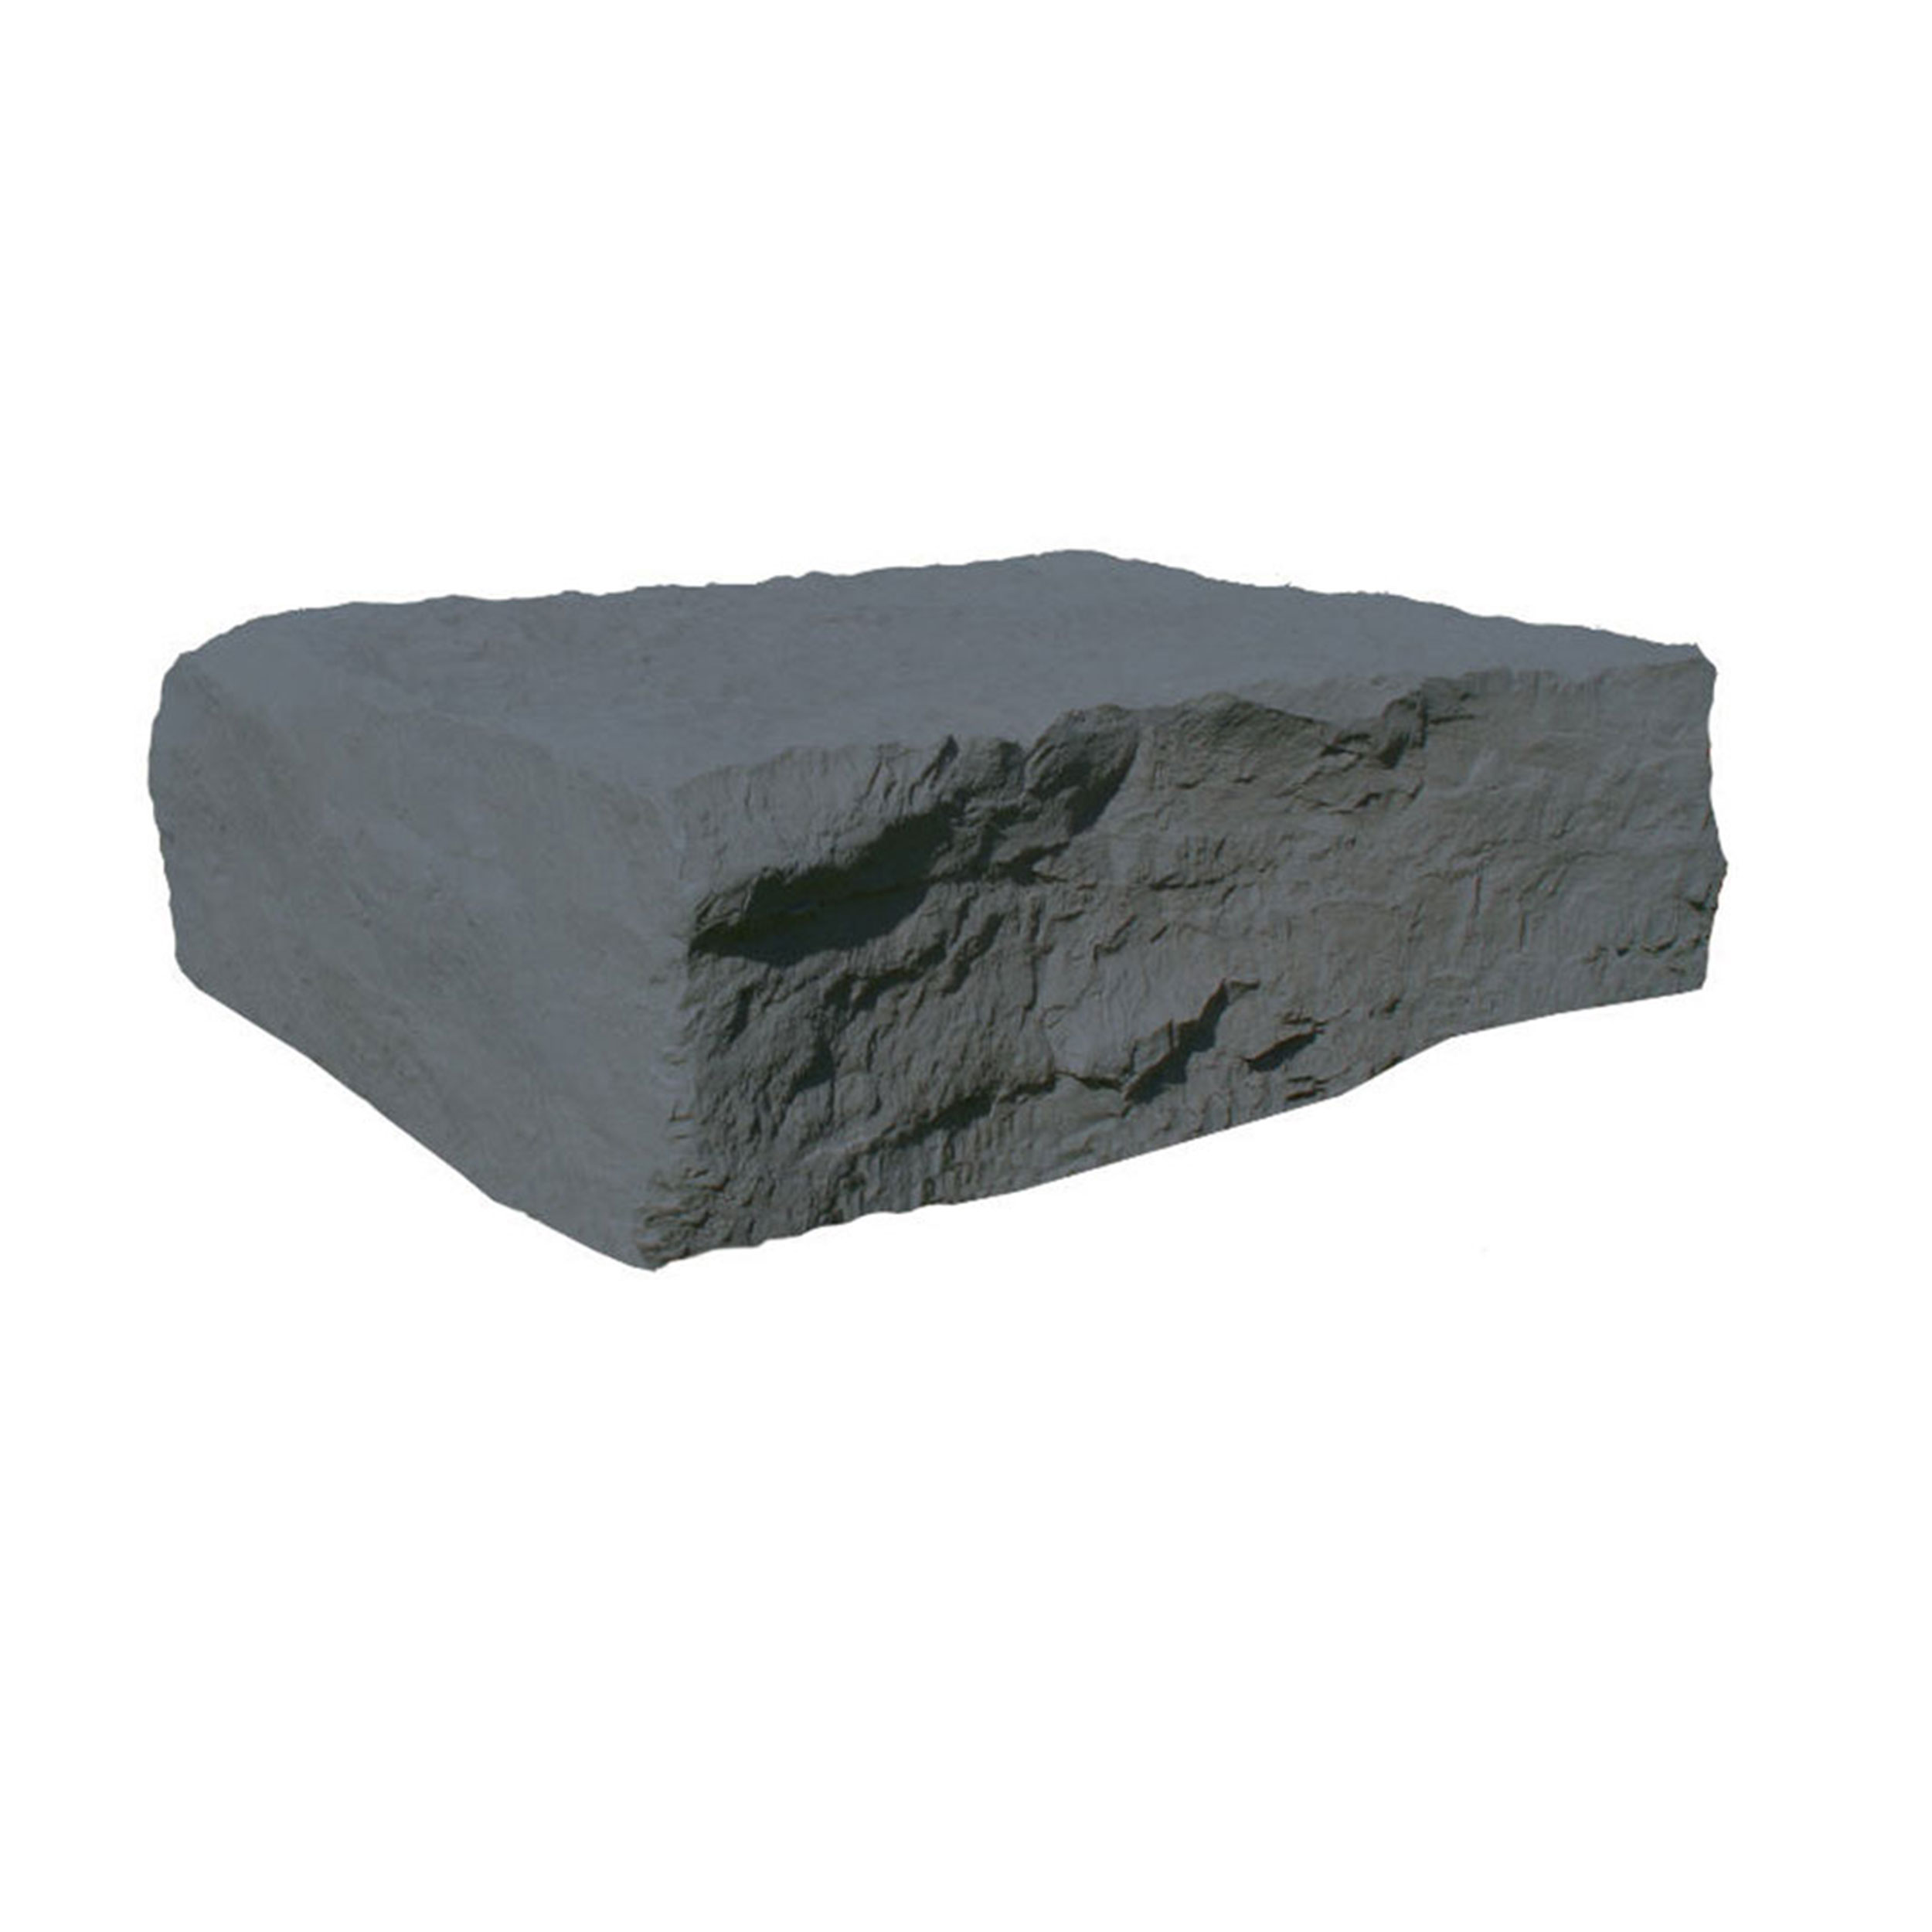 Full Rock Landscaping Rock, Grey